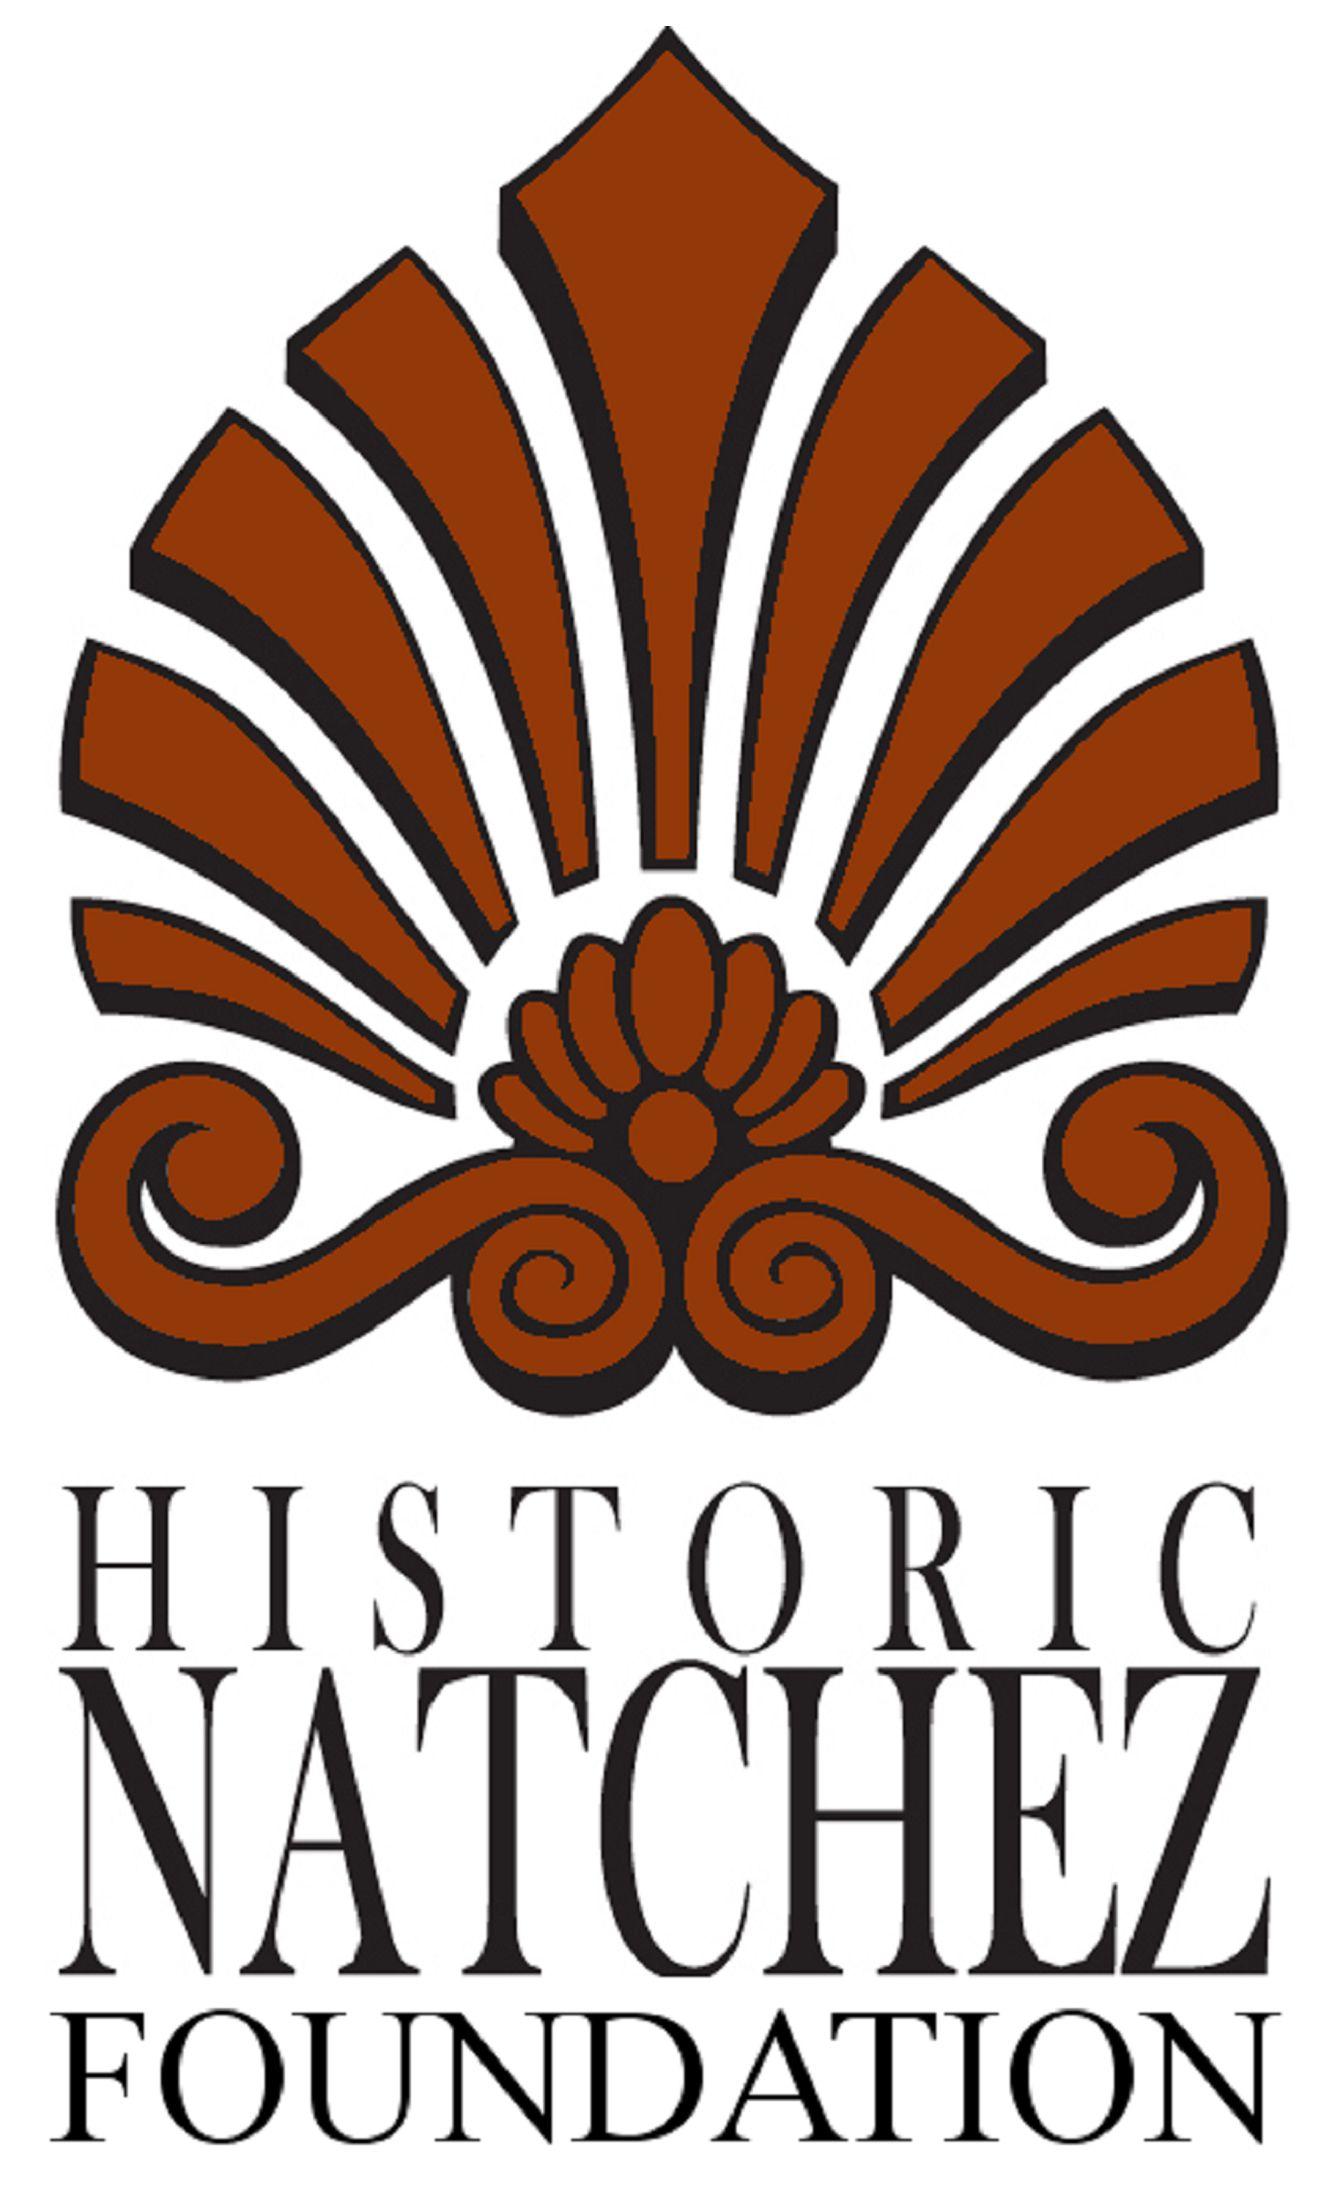 Natchez Logo - Historic Natchez Foundation